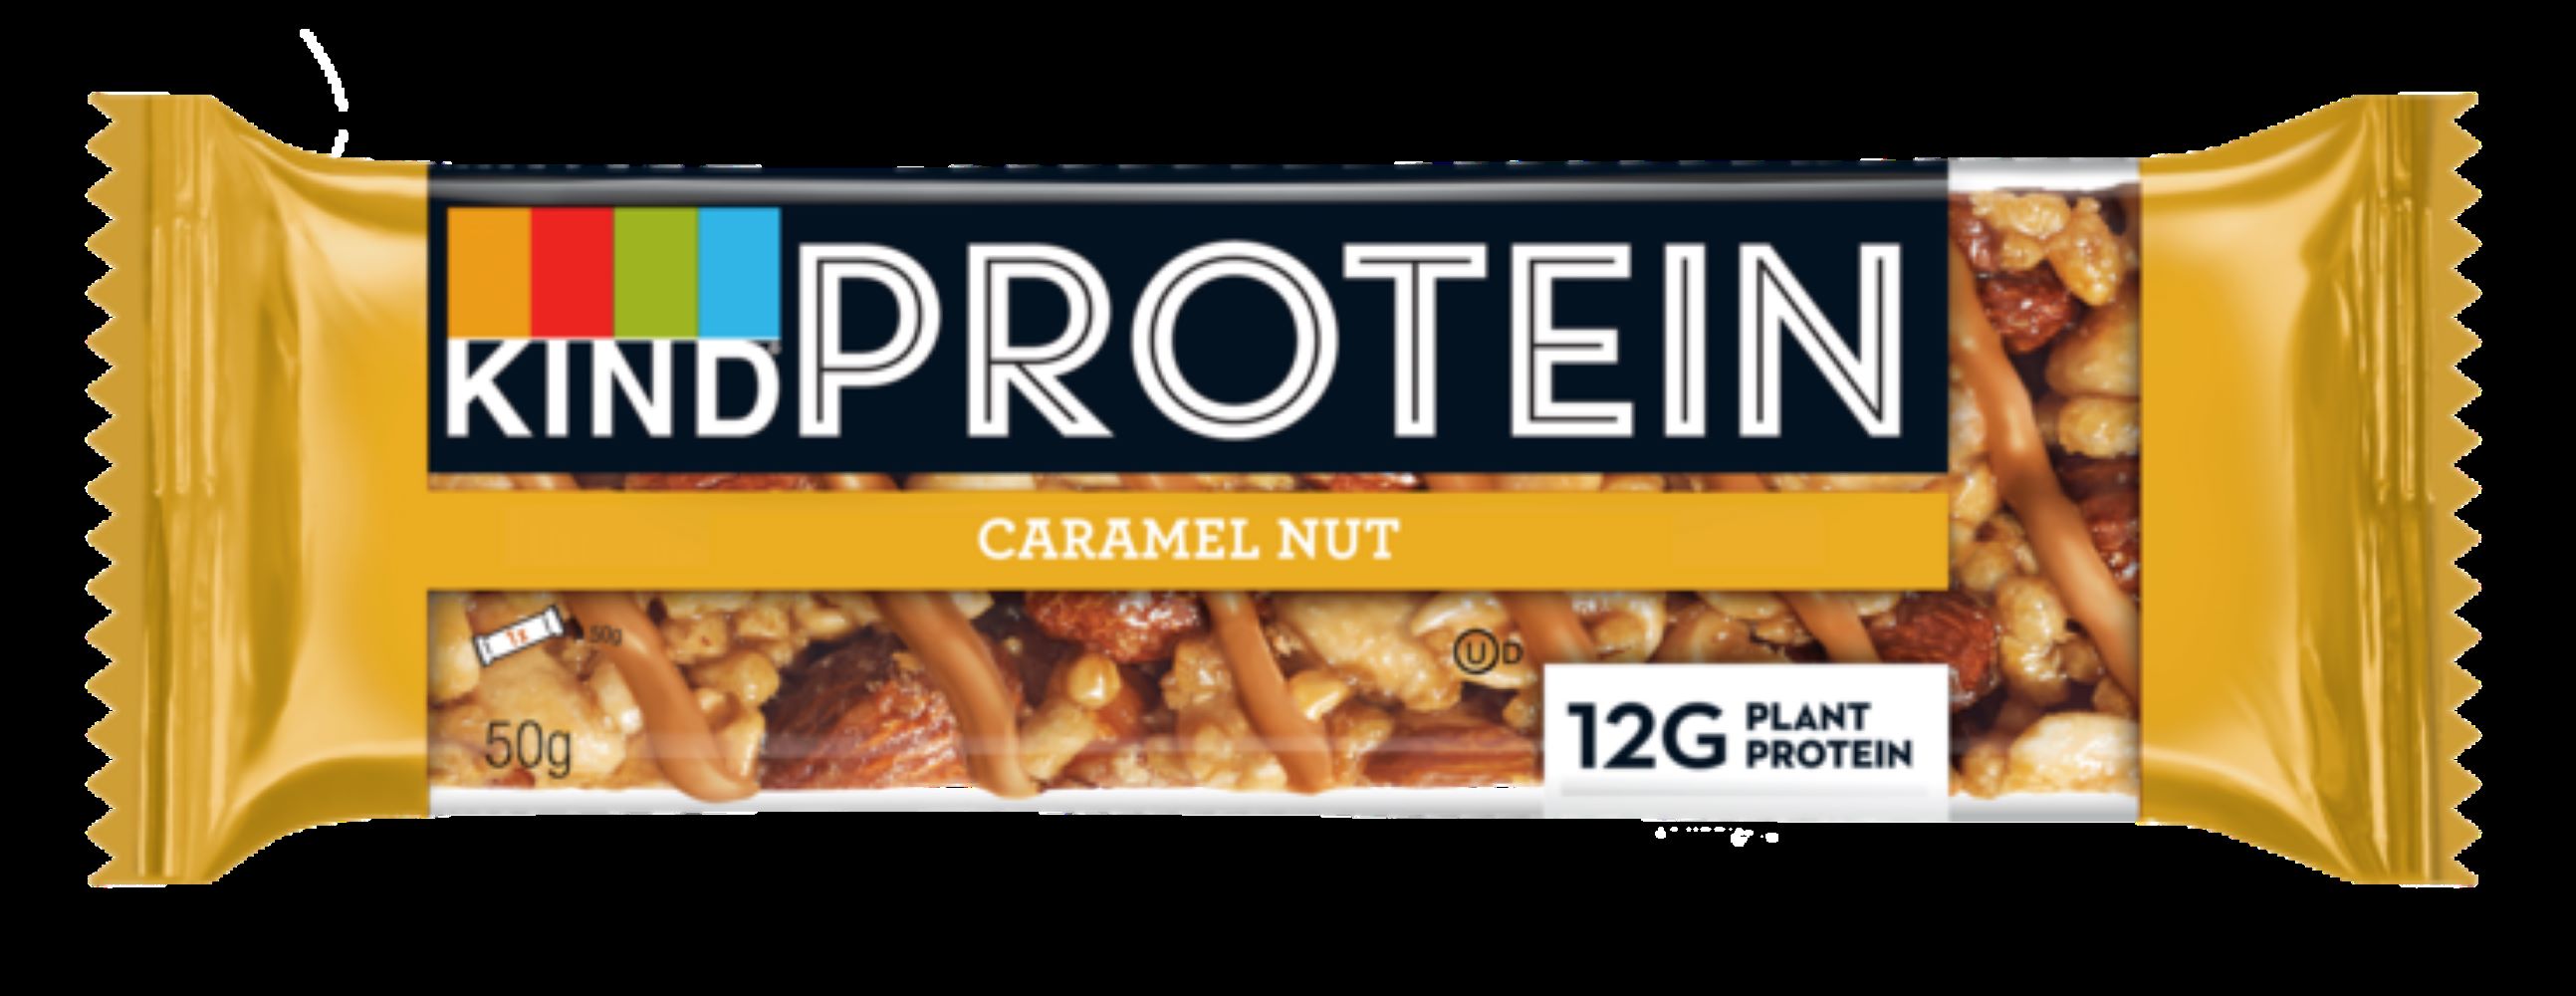 Protein Caramel Nut